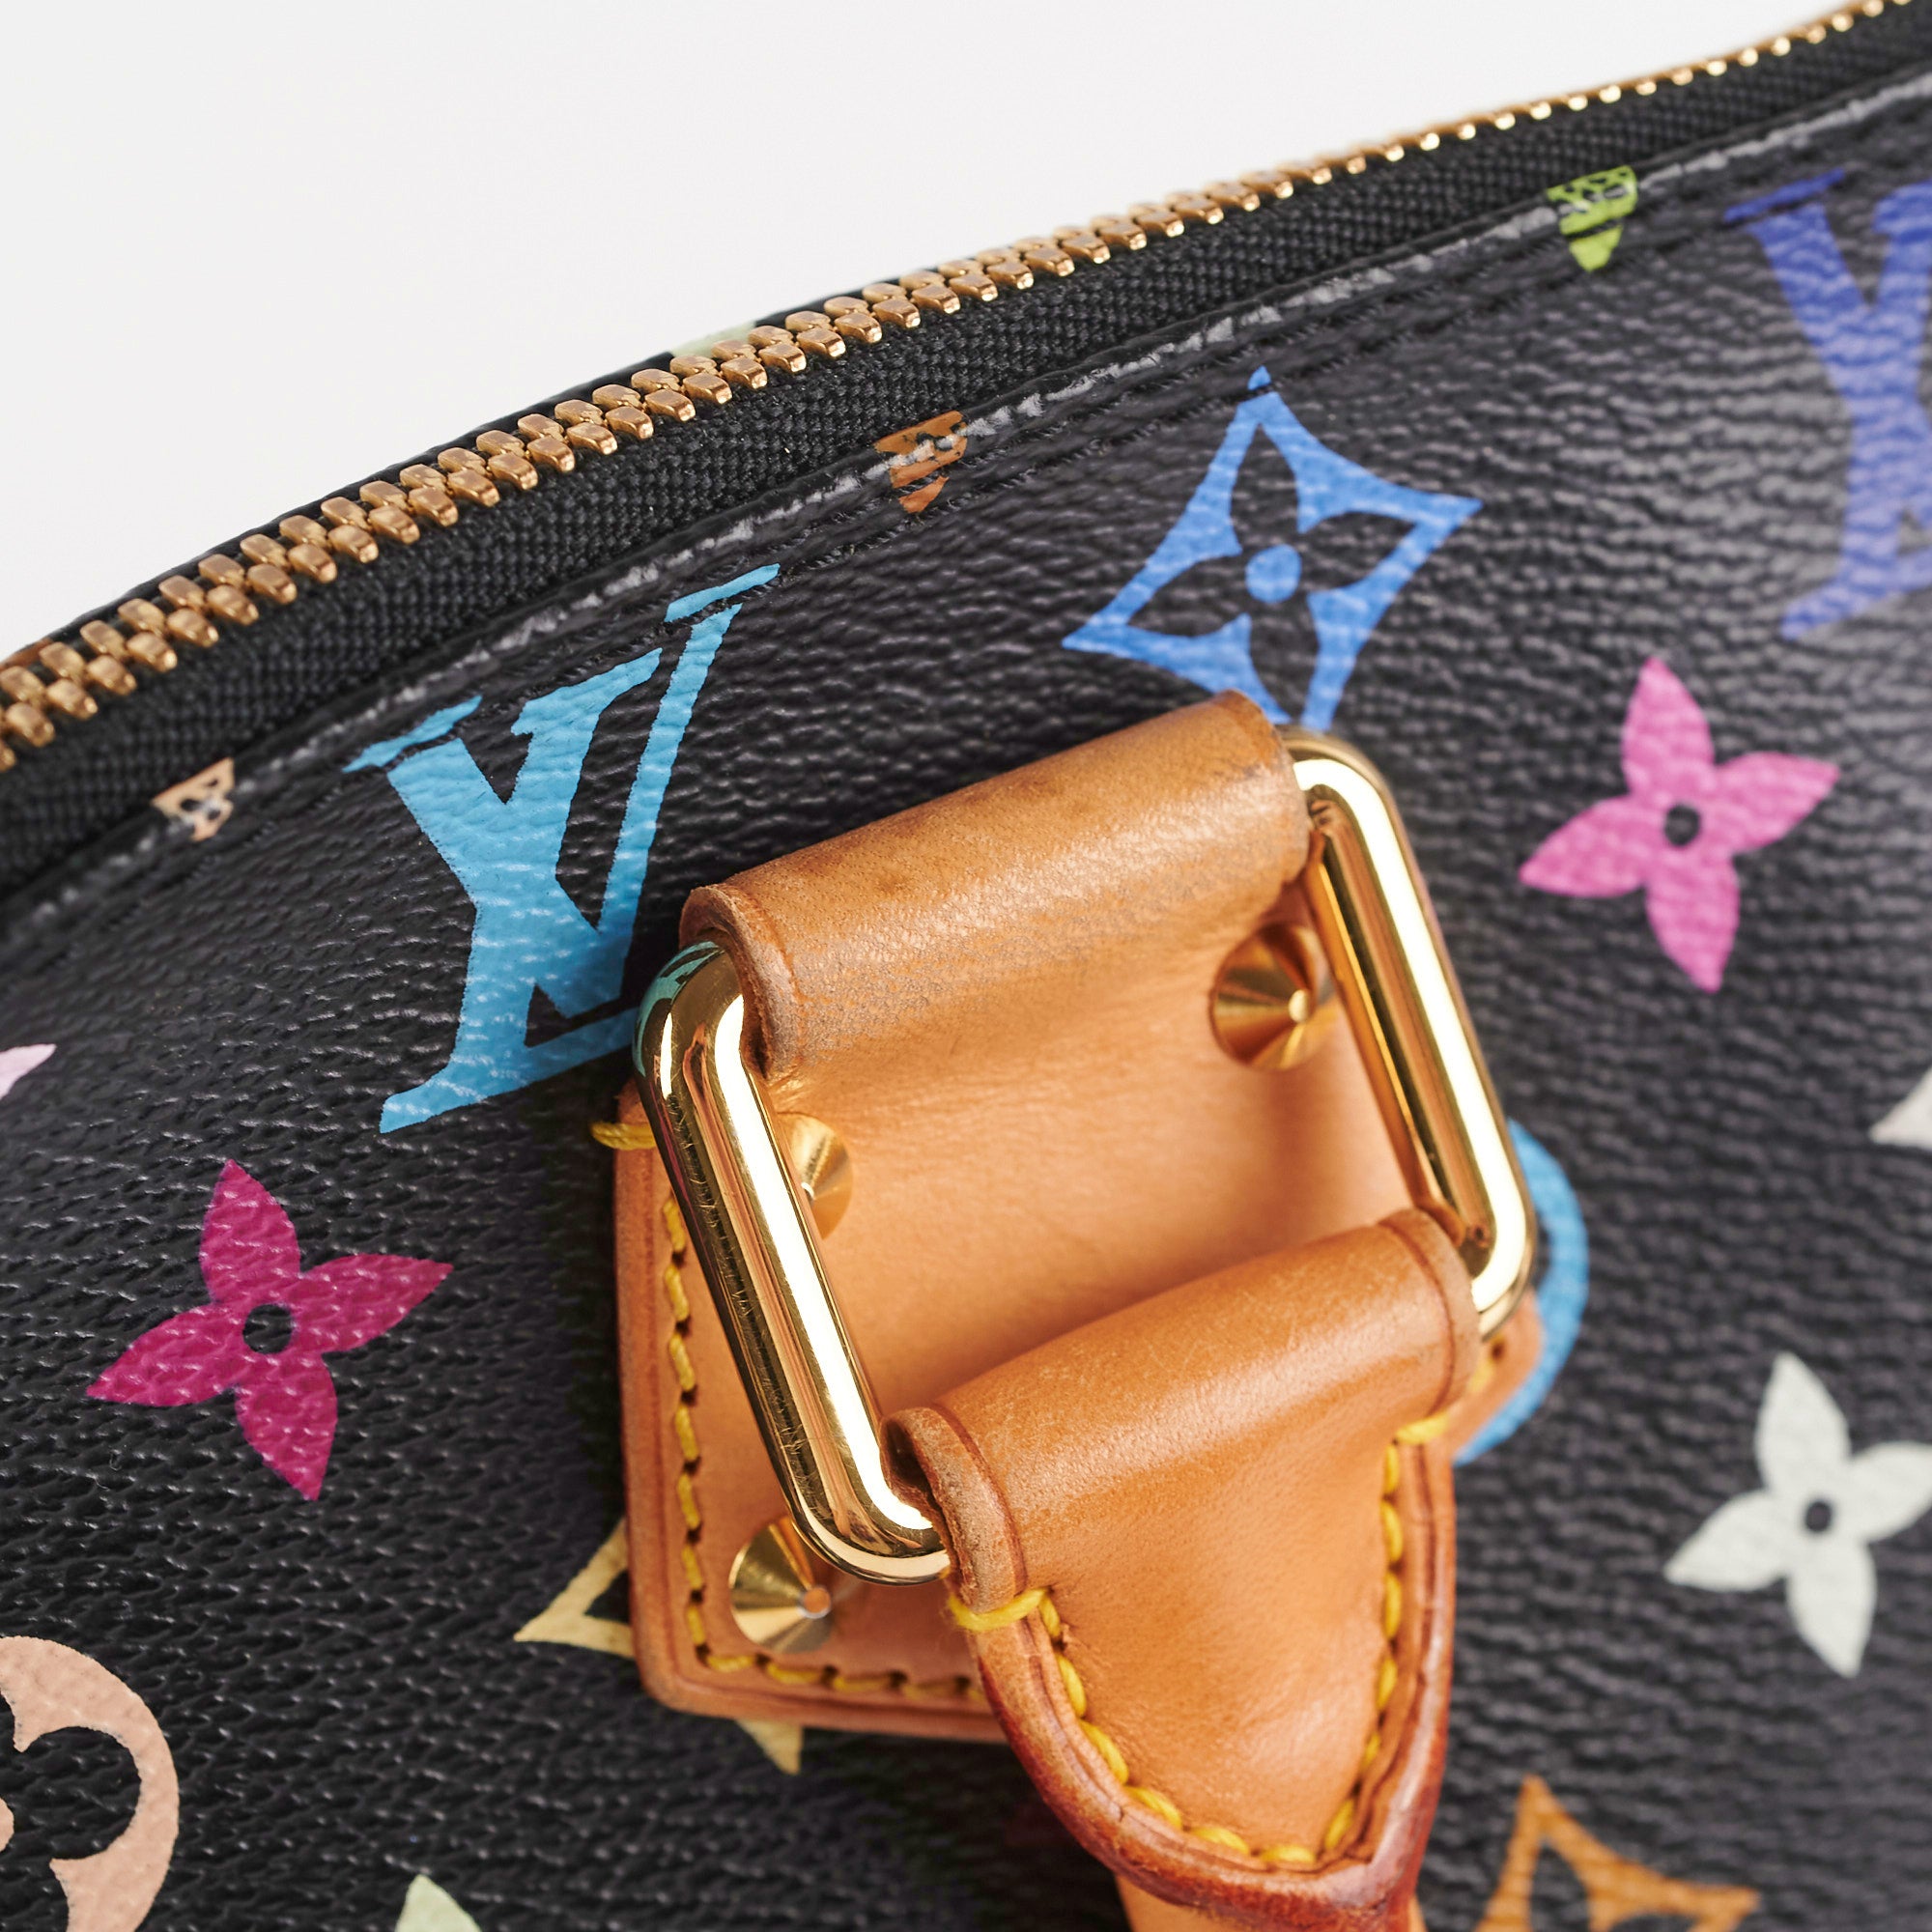 Luxury Louis Vuitton ALMA PM Handbag on the Table Editorial Photo - Image  of display, black: 140754281